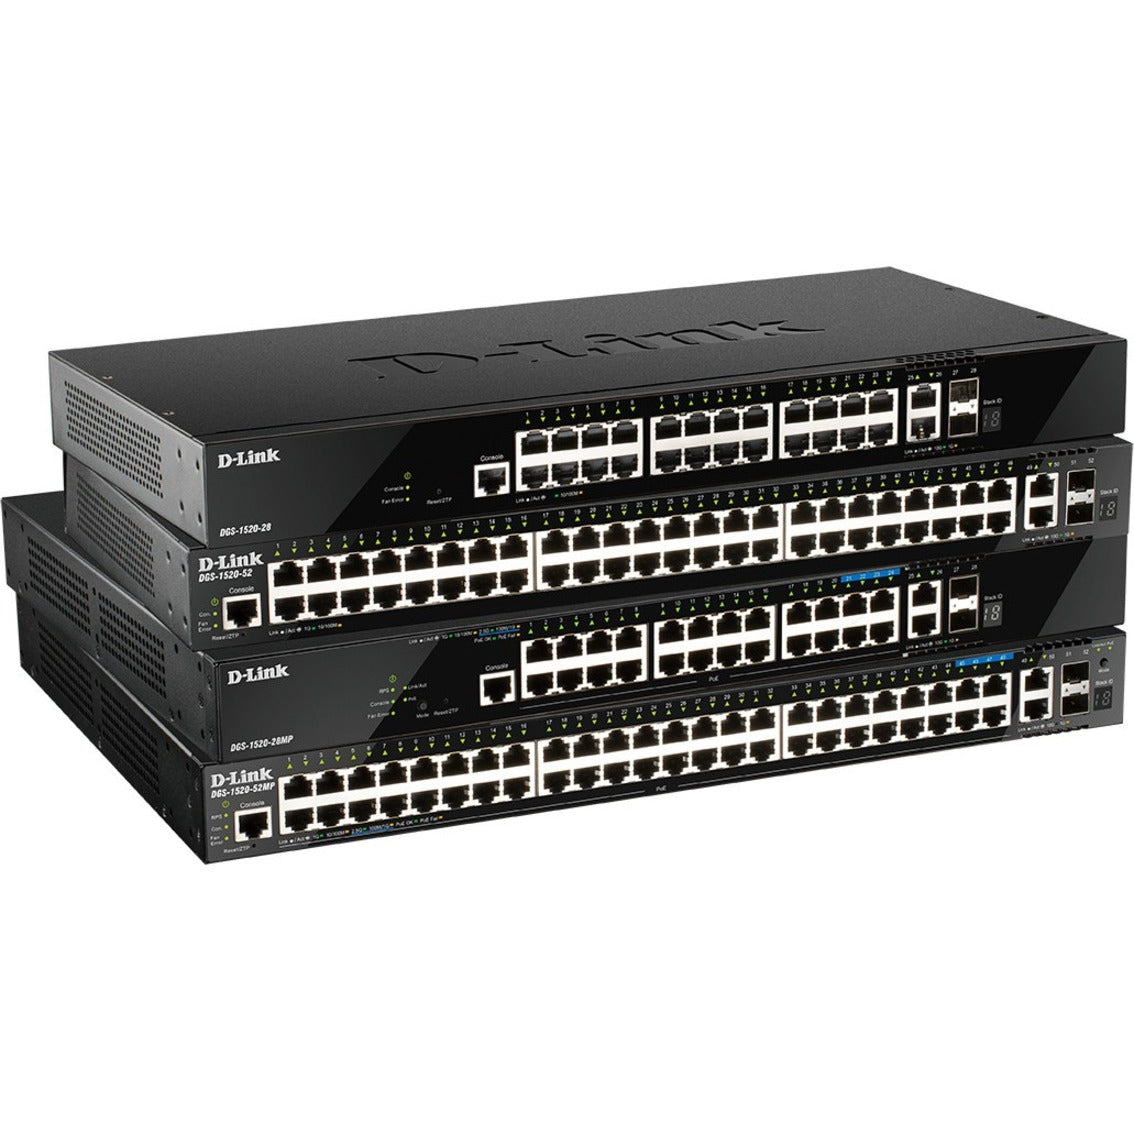 D-Link DGS-1520-52 Commutatore di livello 3 48 porte di rete Gigabit Ethernet 2 slot di espansione Ethernet 10 Gigabit alimentatore garanzia a vita